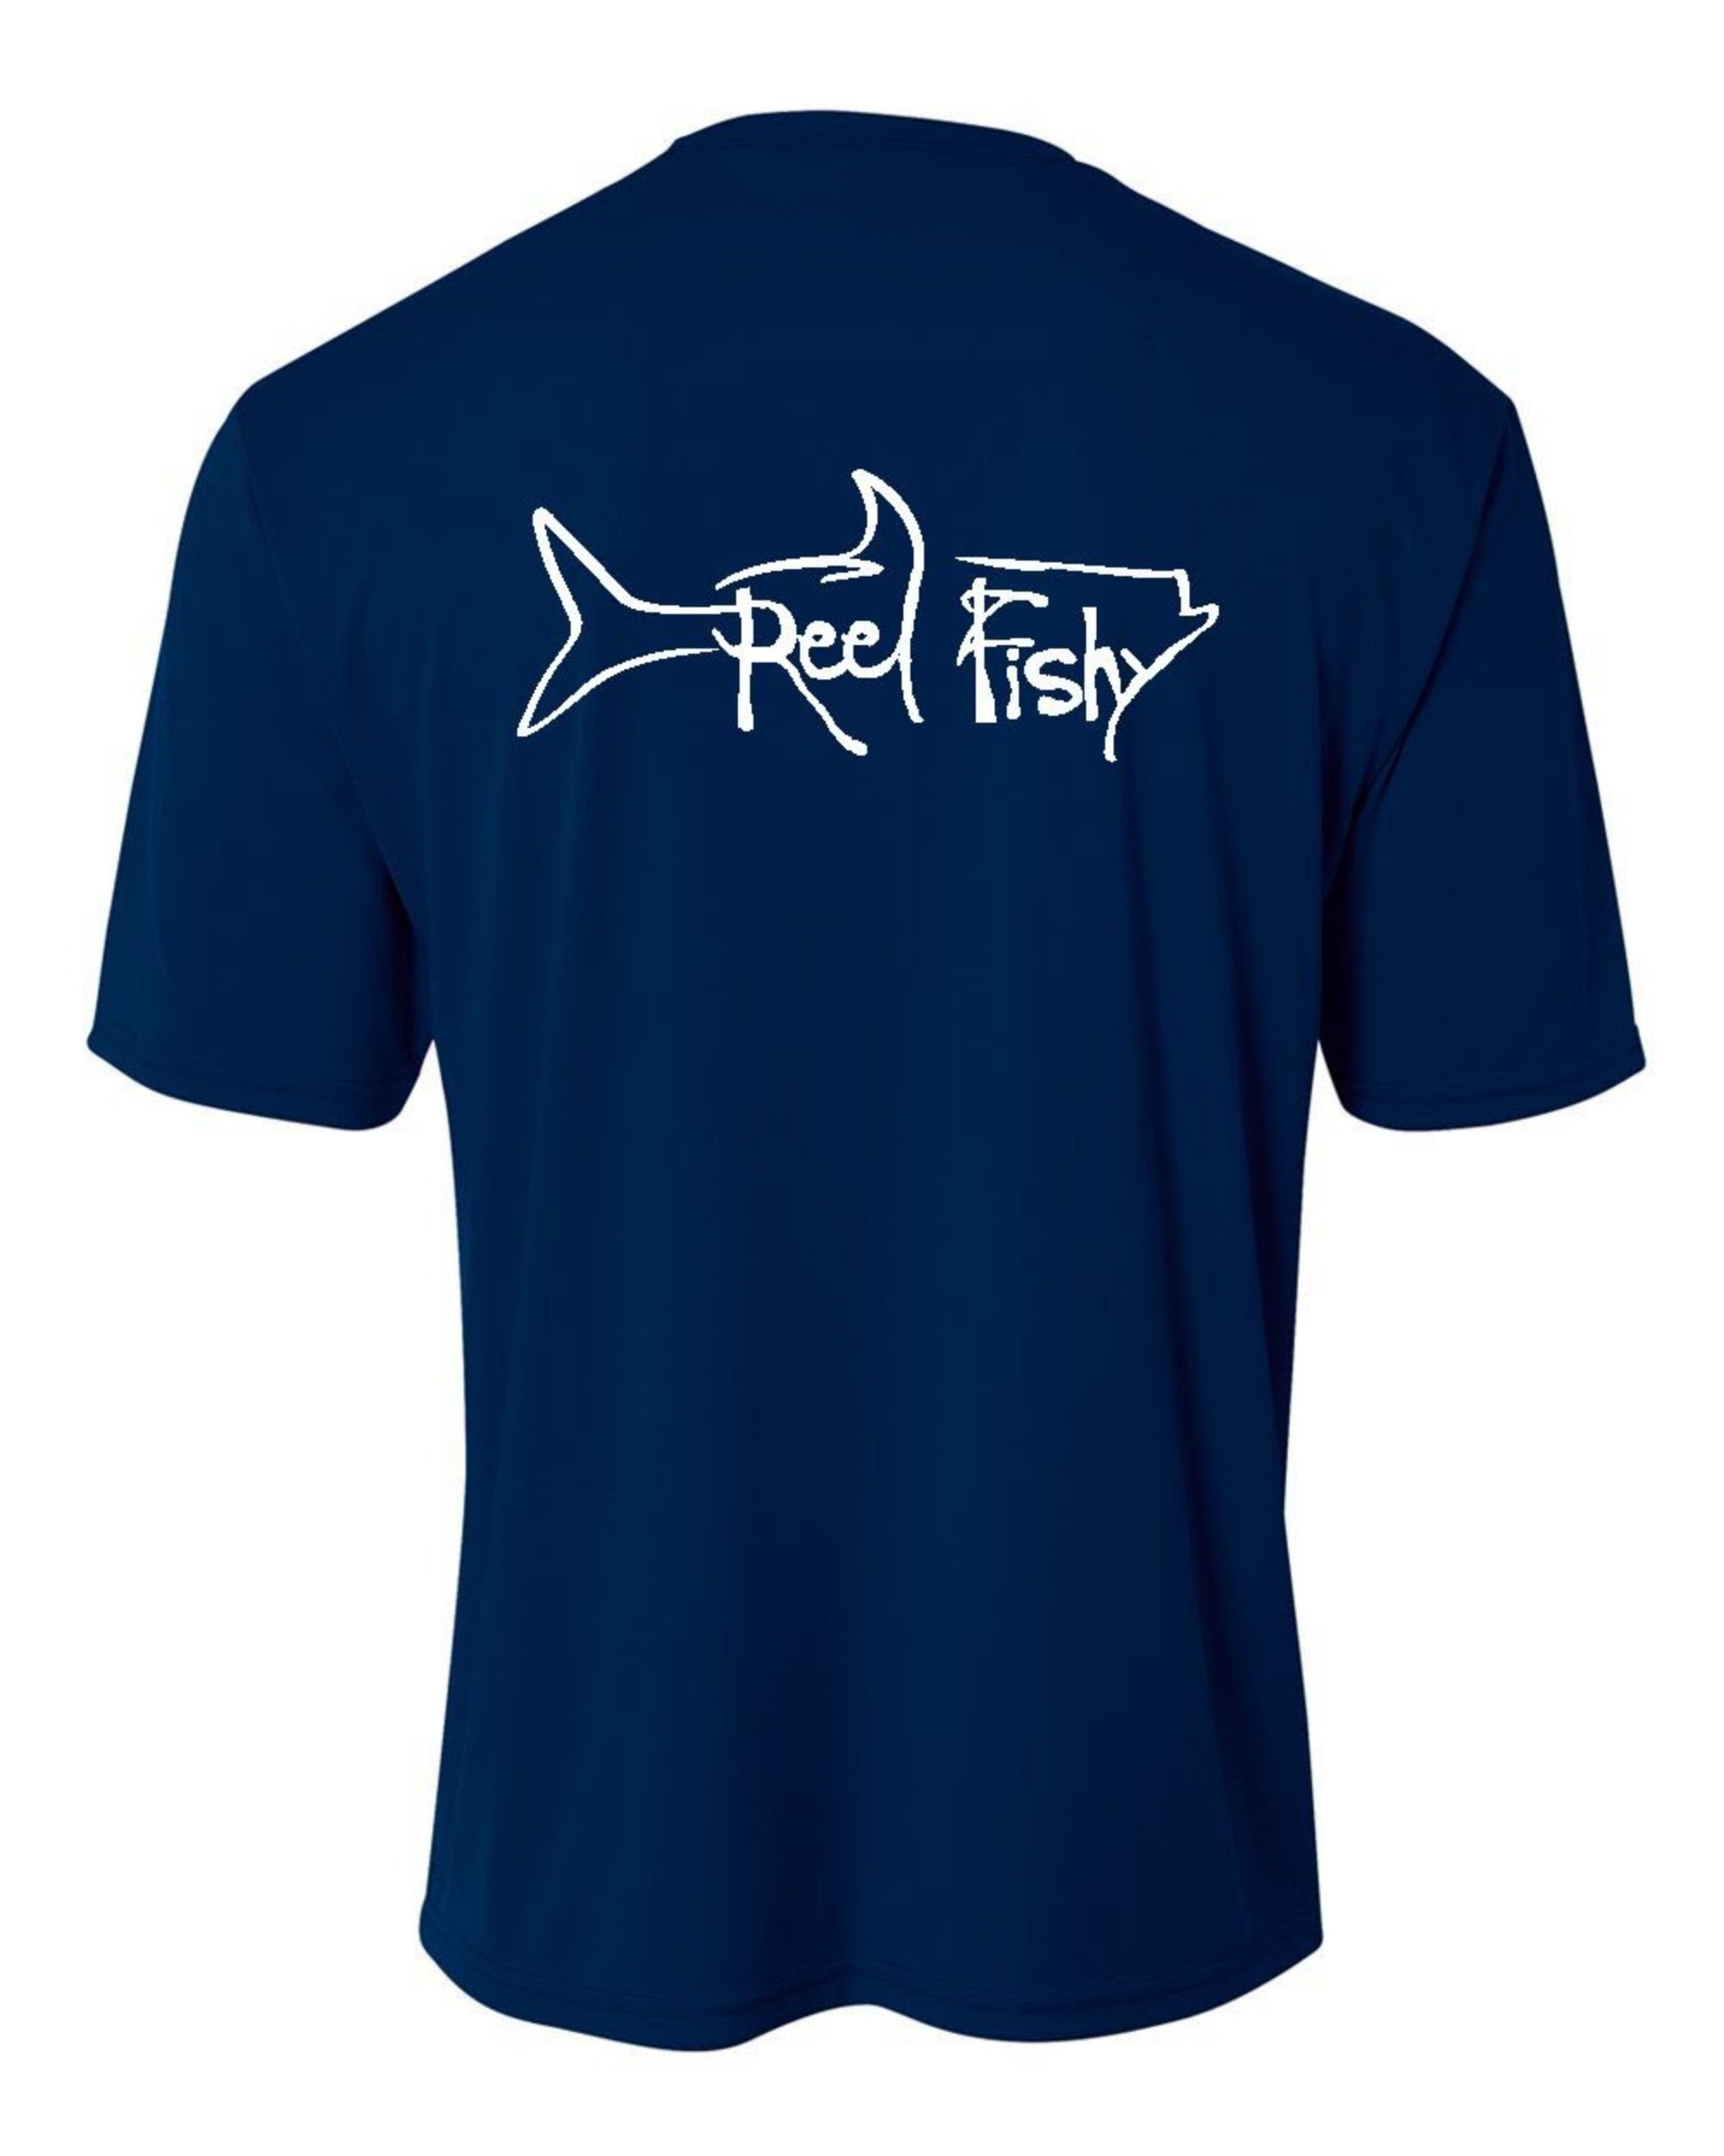 Youth Performance Dry-Fit Tarpon Fishing Shirts 50+Upf Sun Protection - Reel Fishy Apparel L / Charcoal L/S